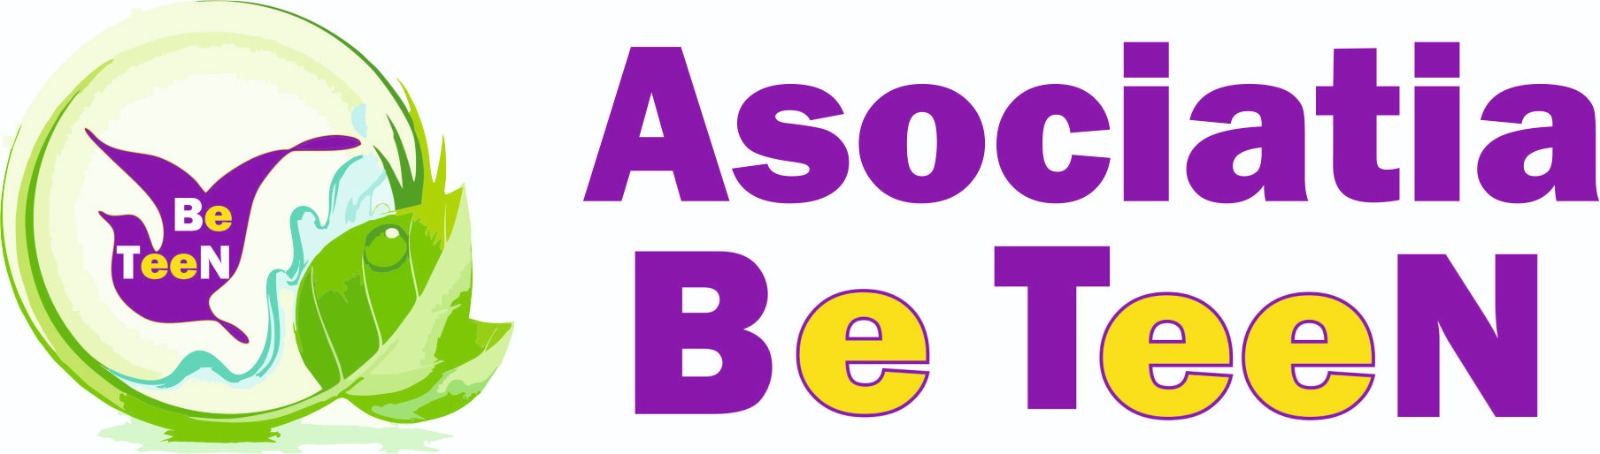 Asociatia Be Teen logo